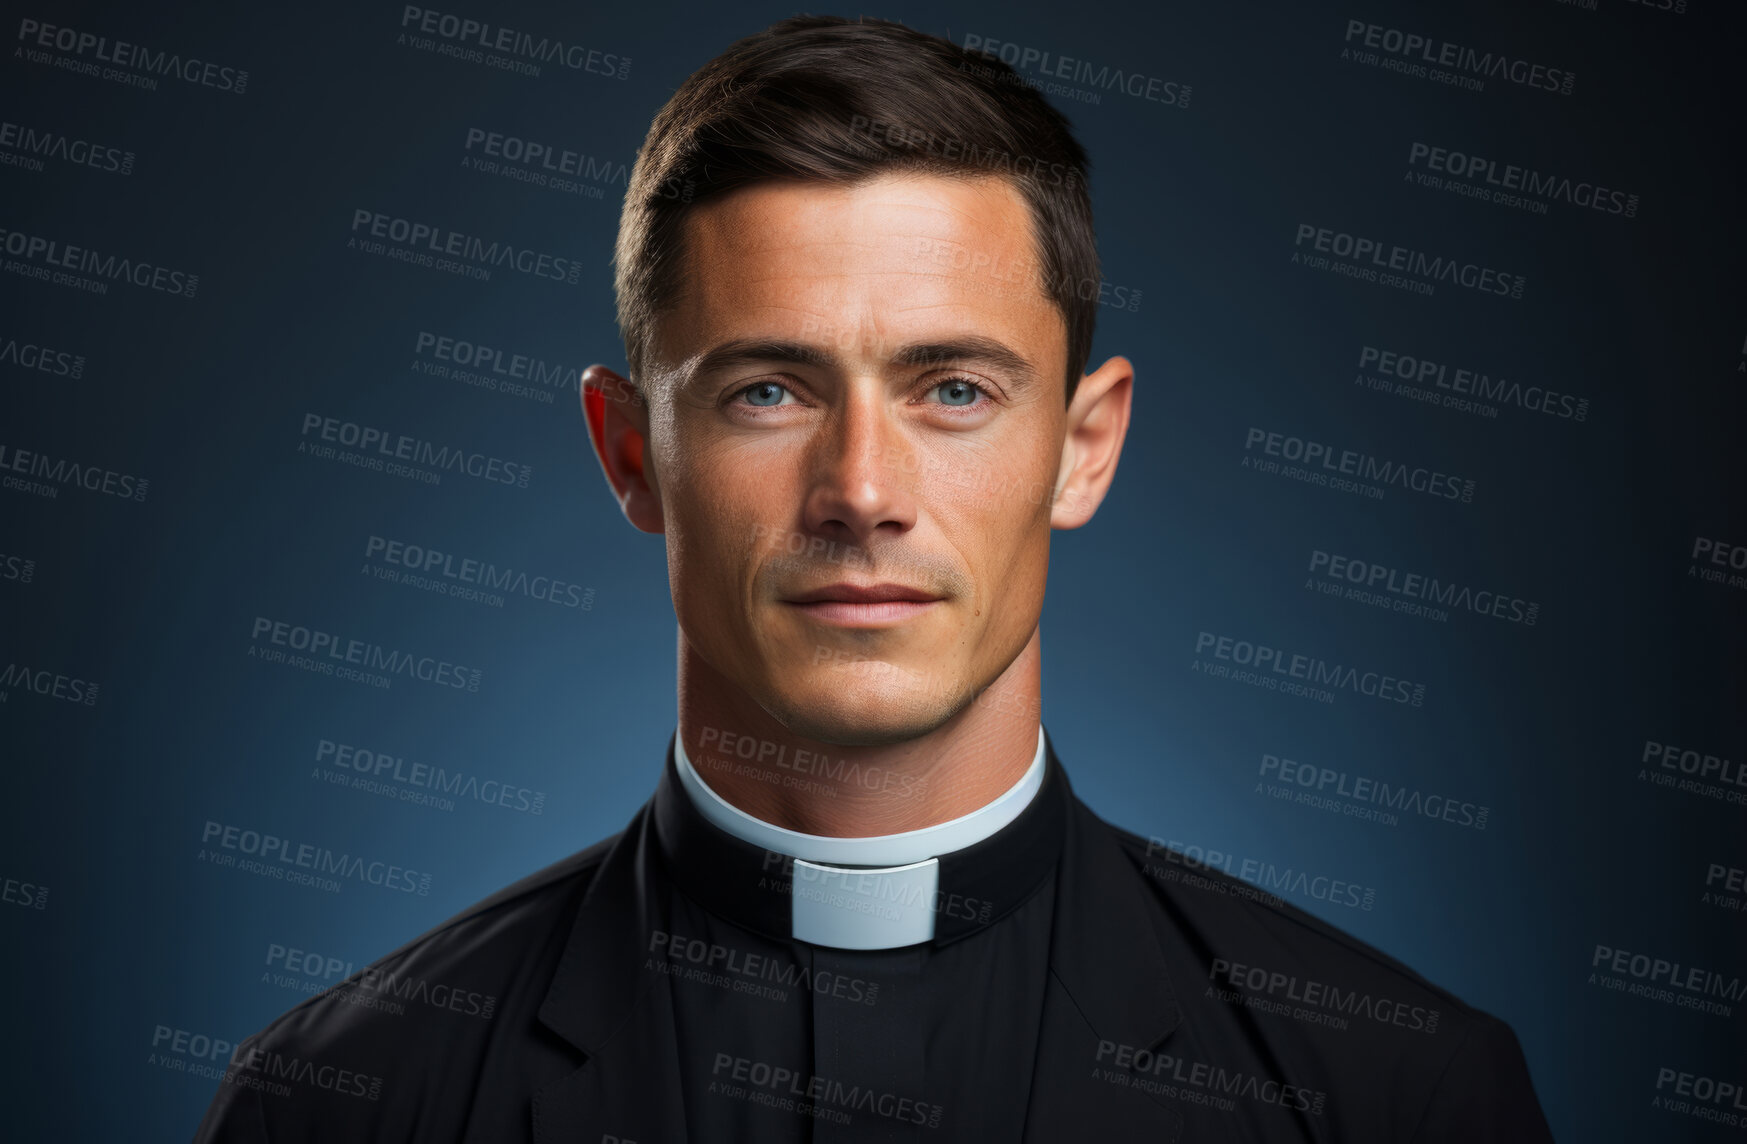 Buy stock photo Studio portrait of caucasian priest against orange backdrop. Religion concept.